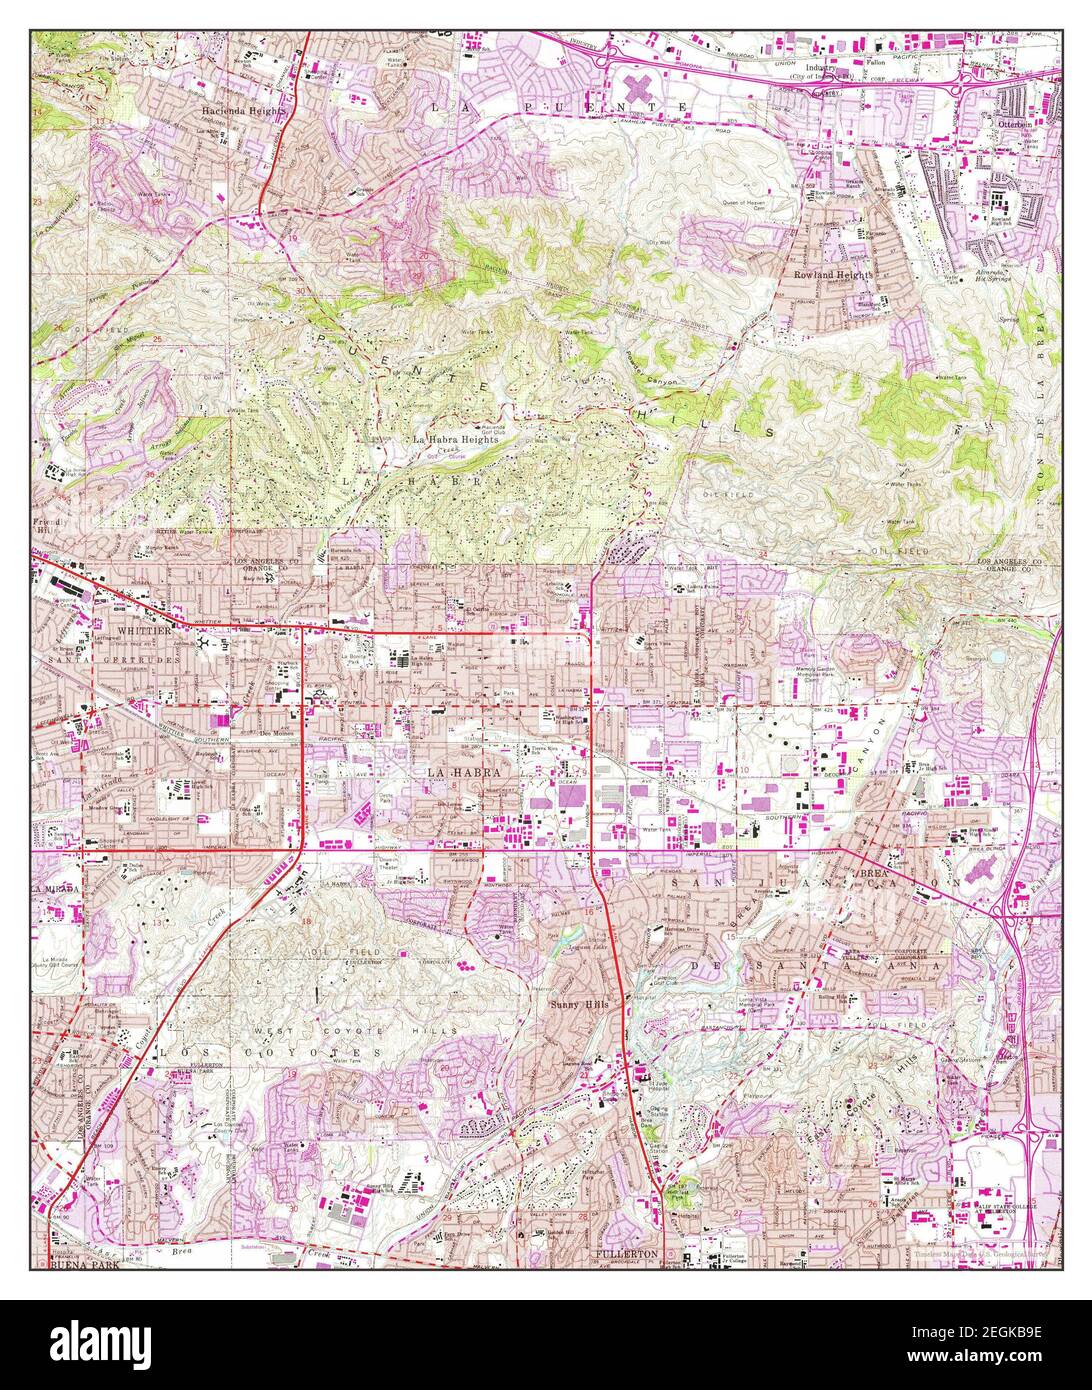 La Habra, California, map 1964, 1:24000, United States of America by Timeless Maps, data U.S. Geological Survey Stock Photo